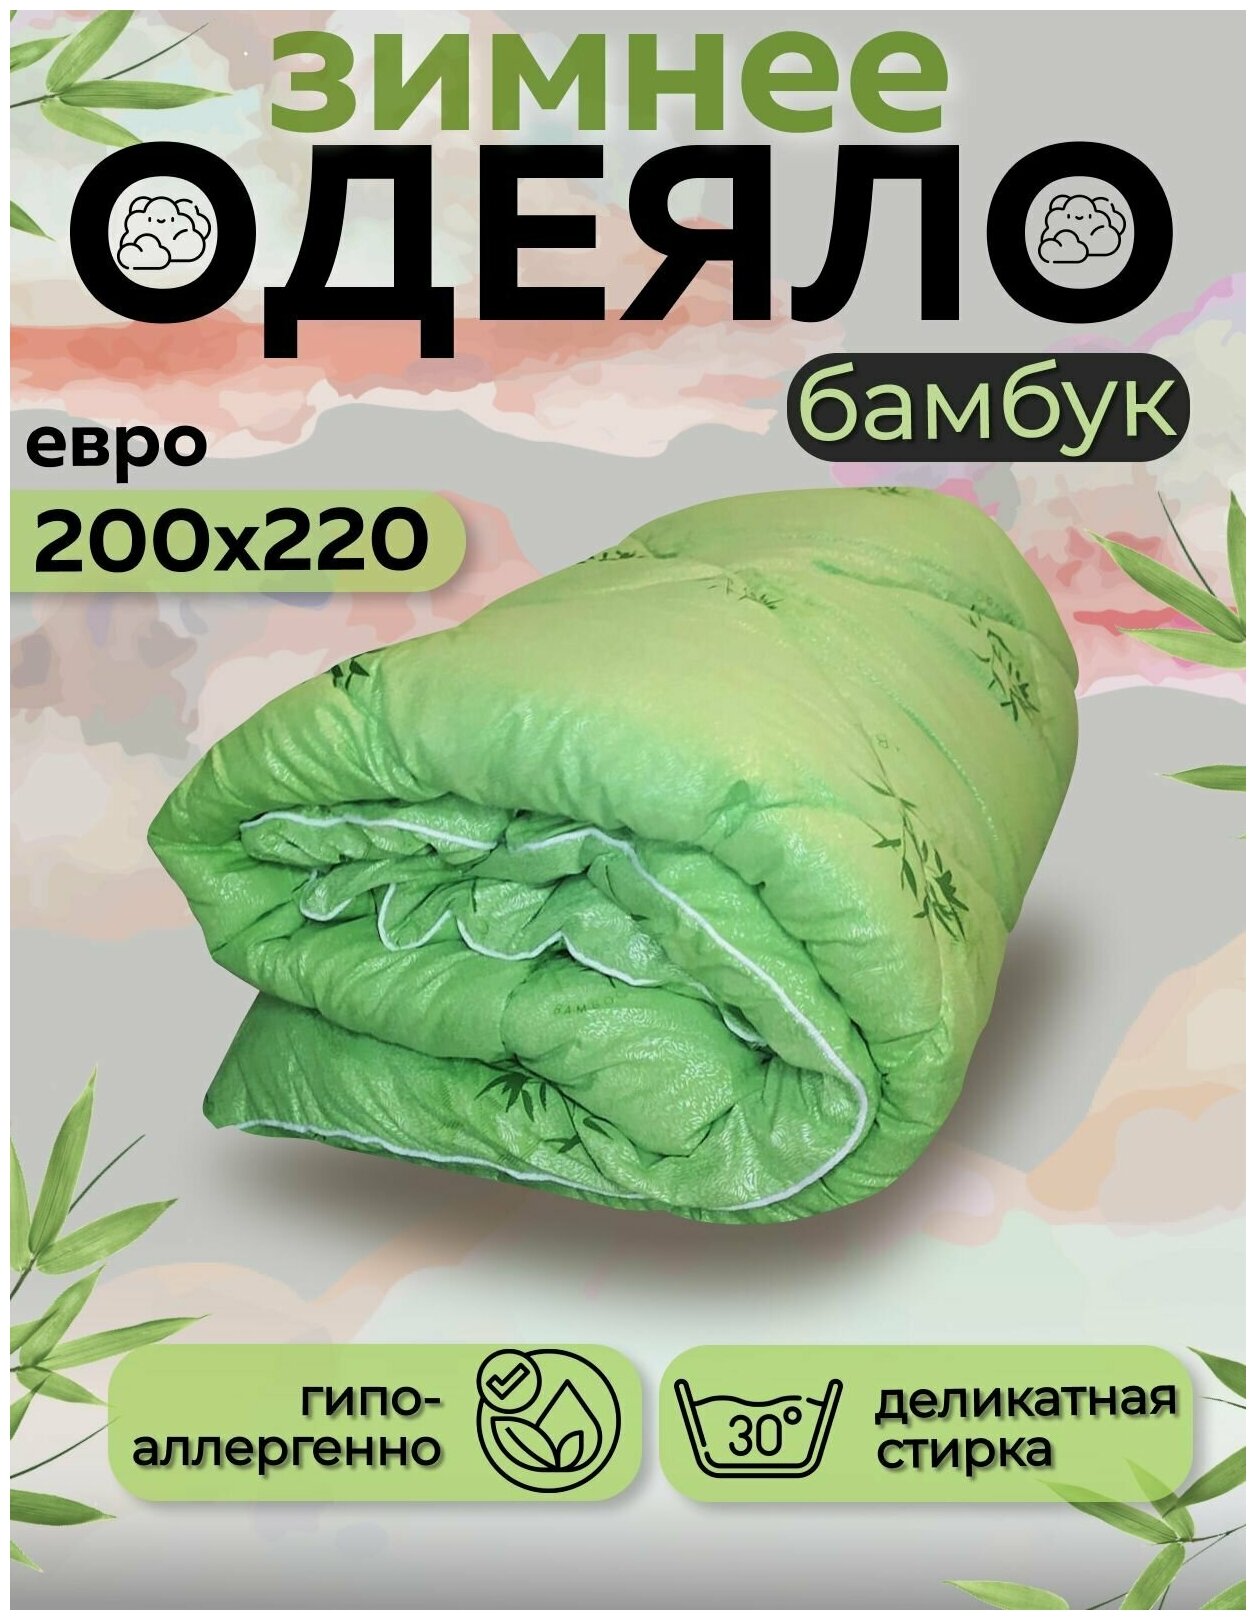 Зимнее Евро одеяло Асика «Бамбуковое волокно» 200х220 см - фотография № 5